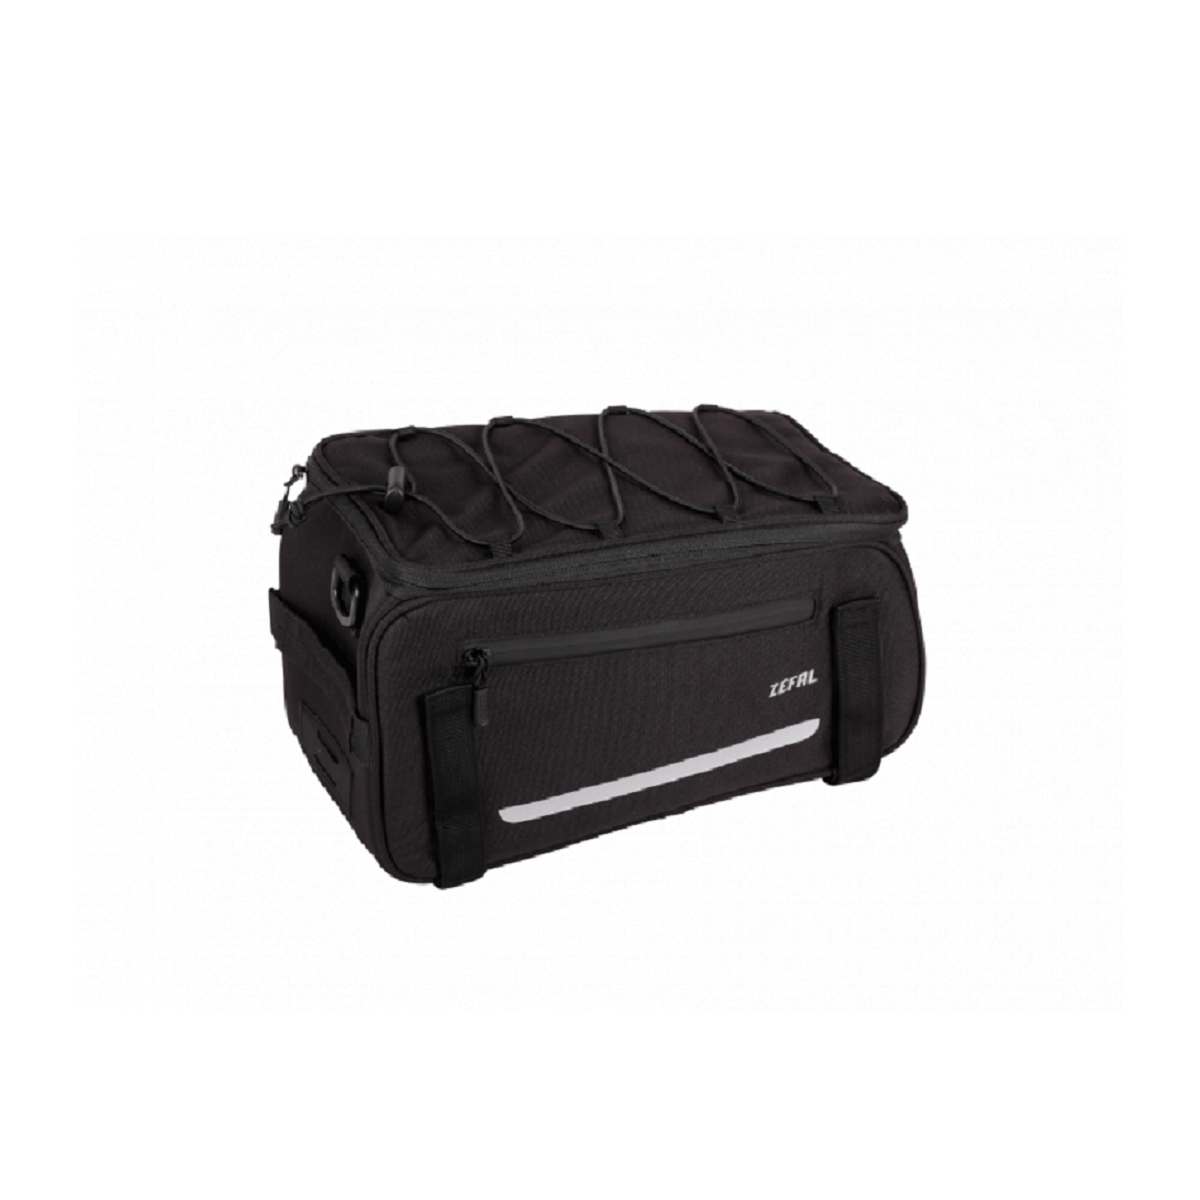 ZEFAL Z TRAVELER 40 9L pannier bag - black